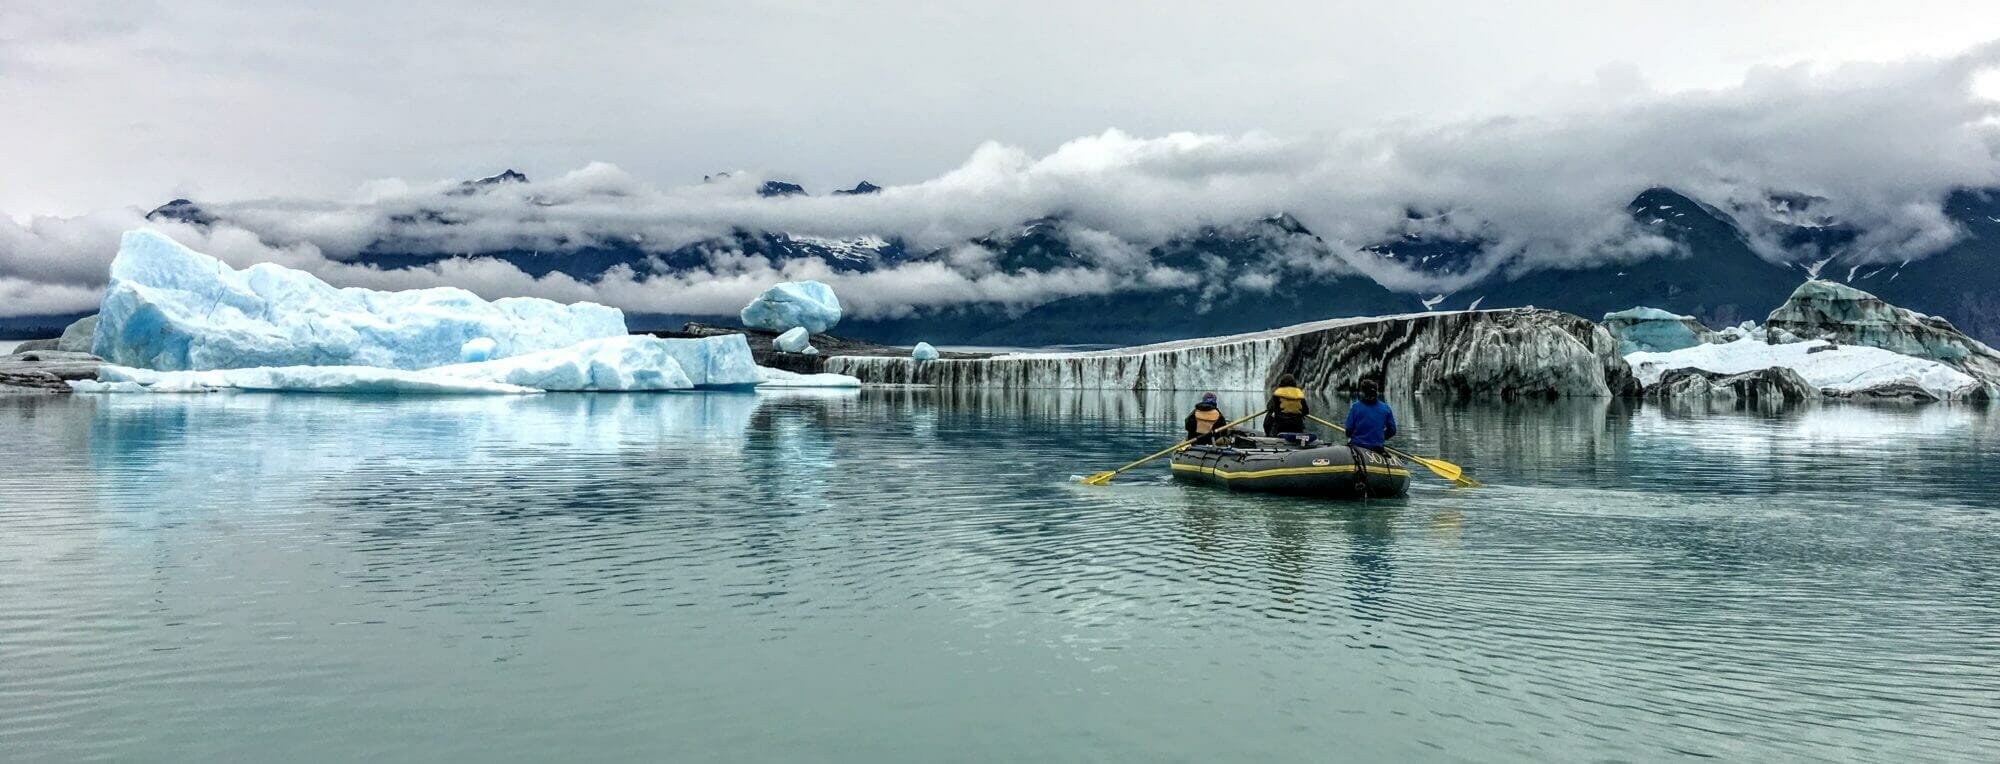 Alaska Rafting with Arctic Wild